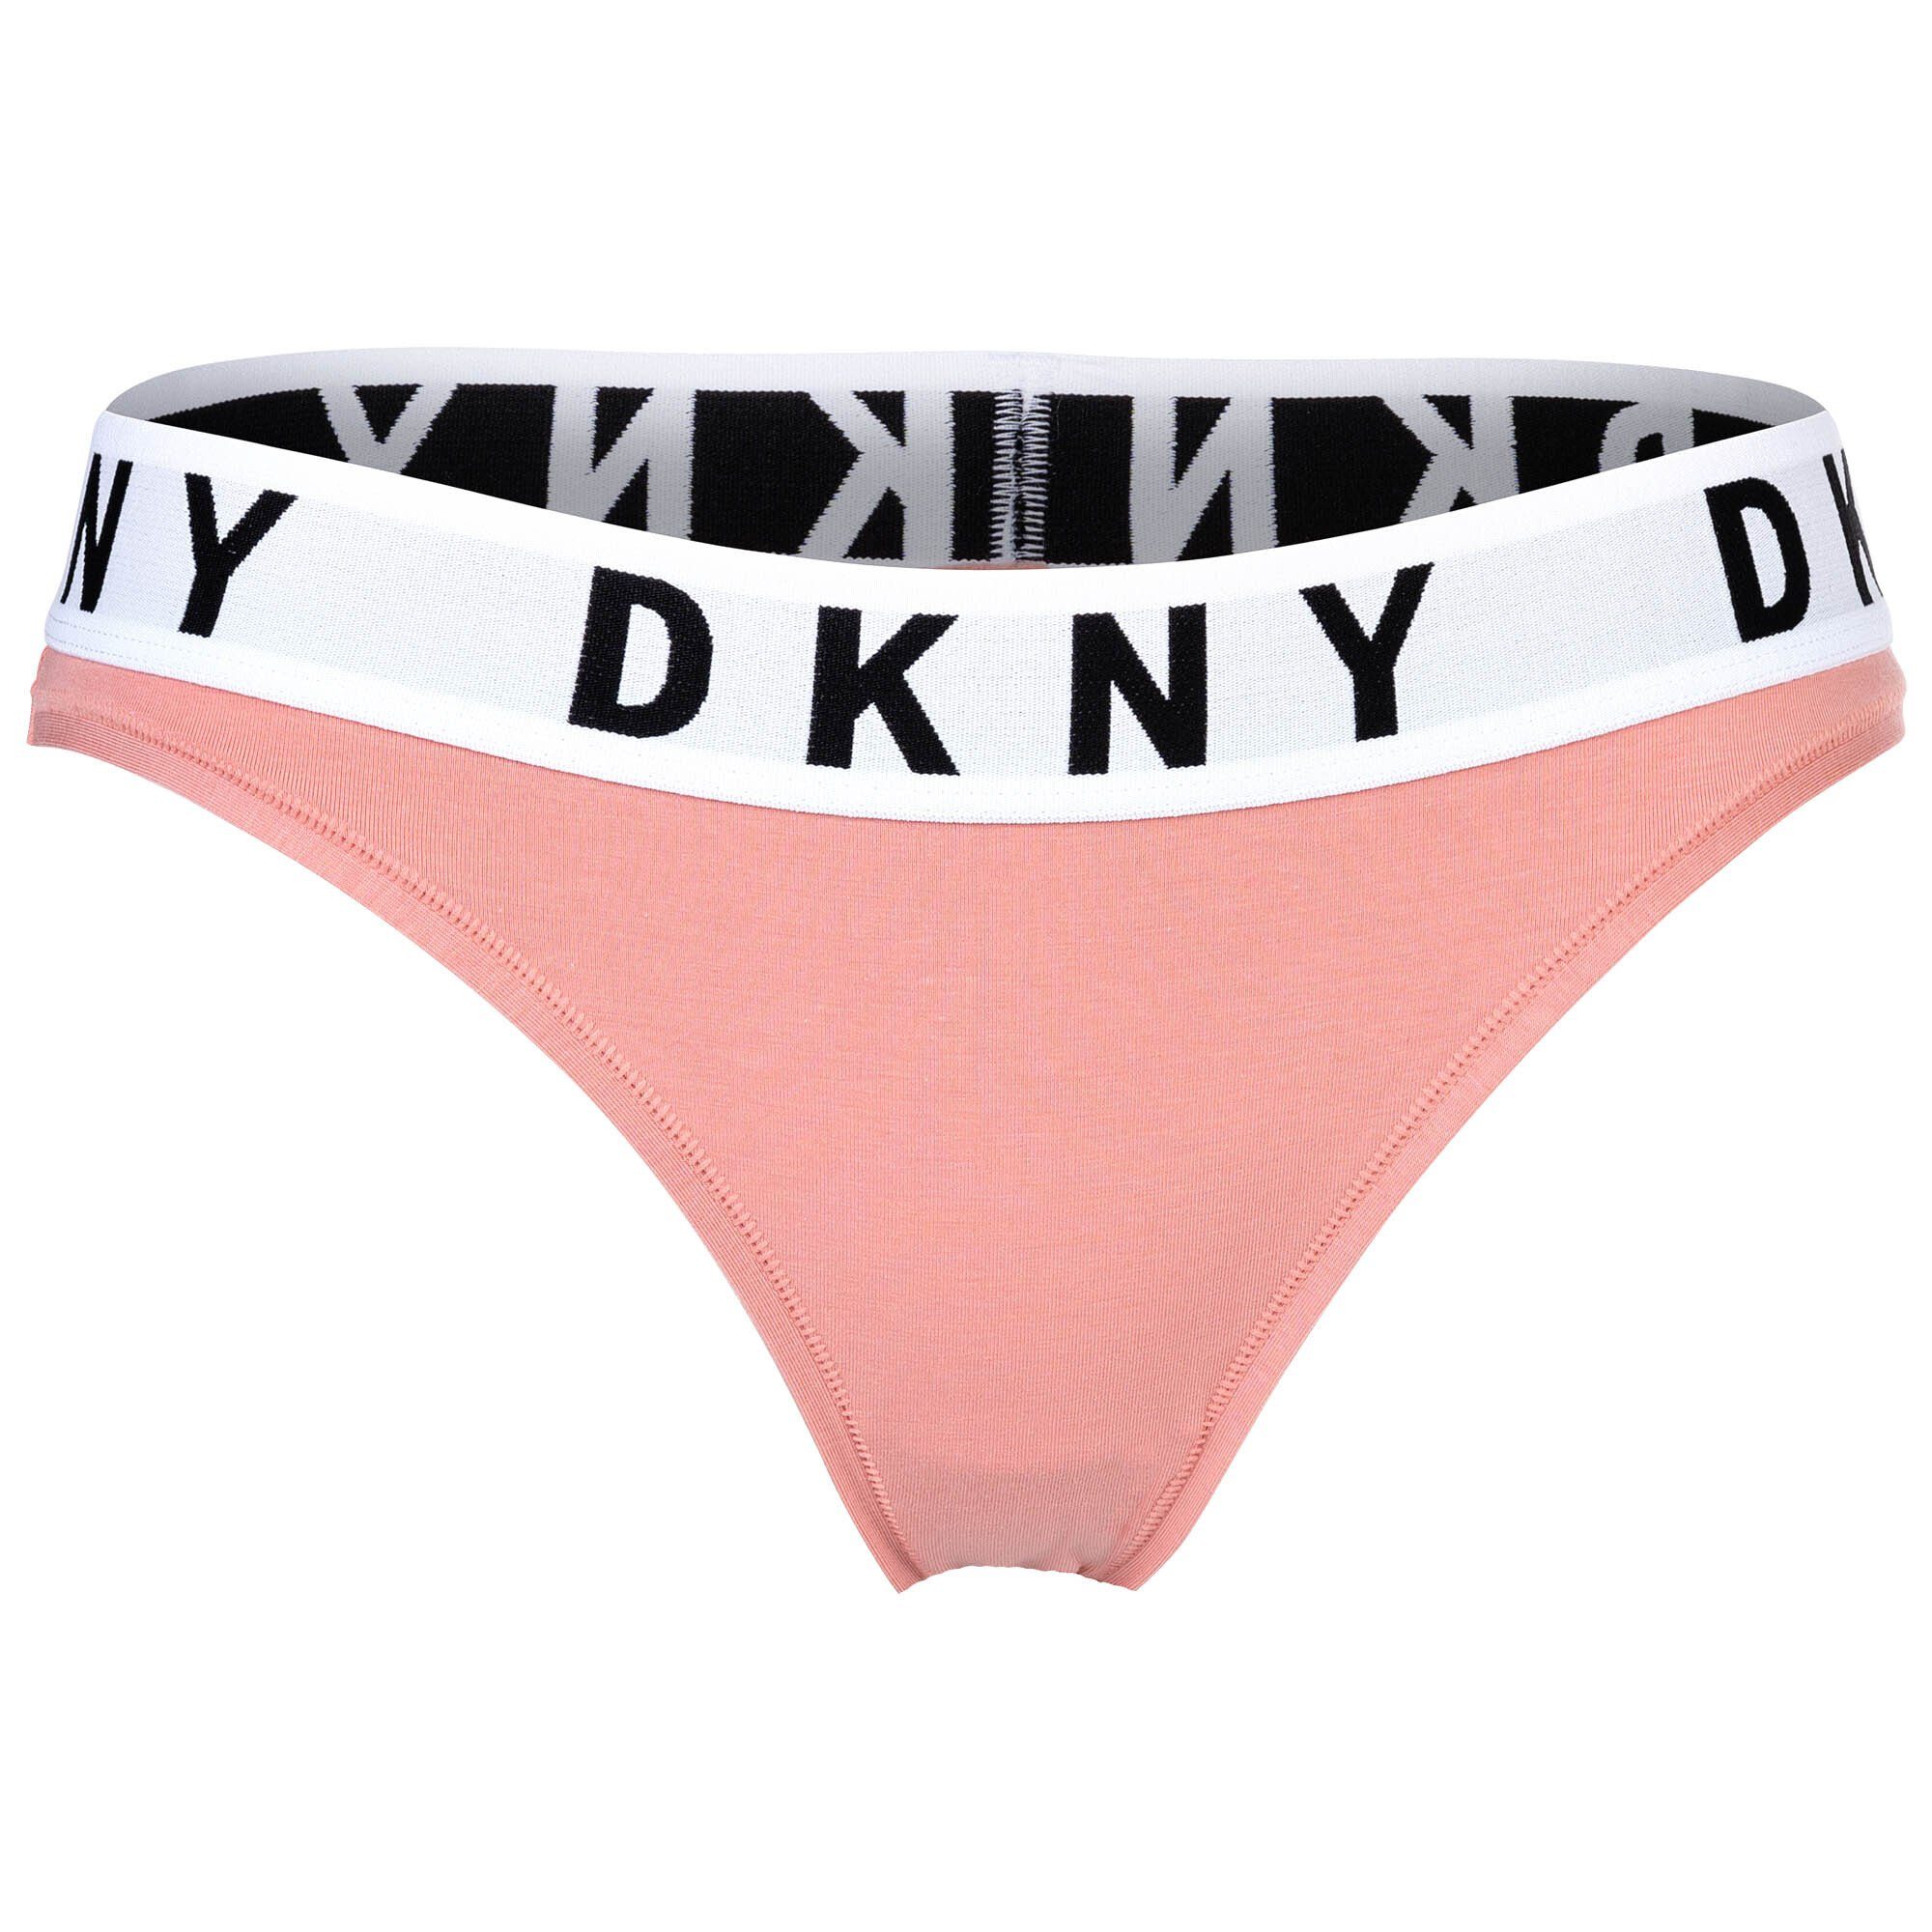 DKNY Panty Damen Altrosa Cotton Brief, Stretch Modal - Slip